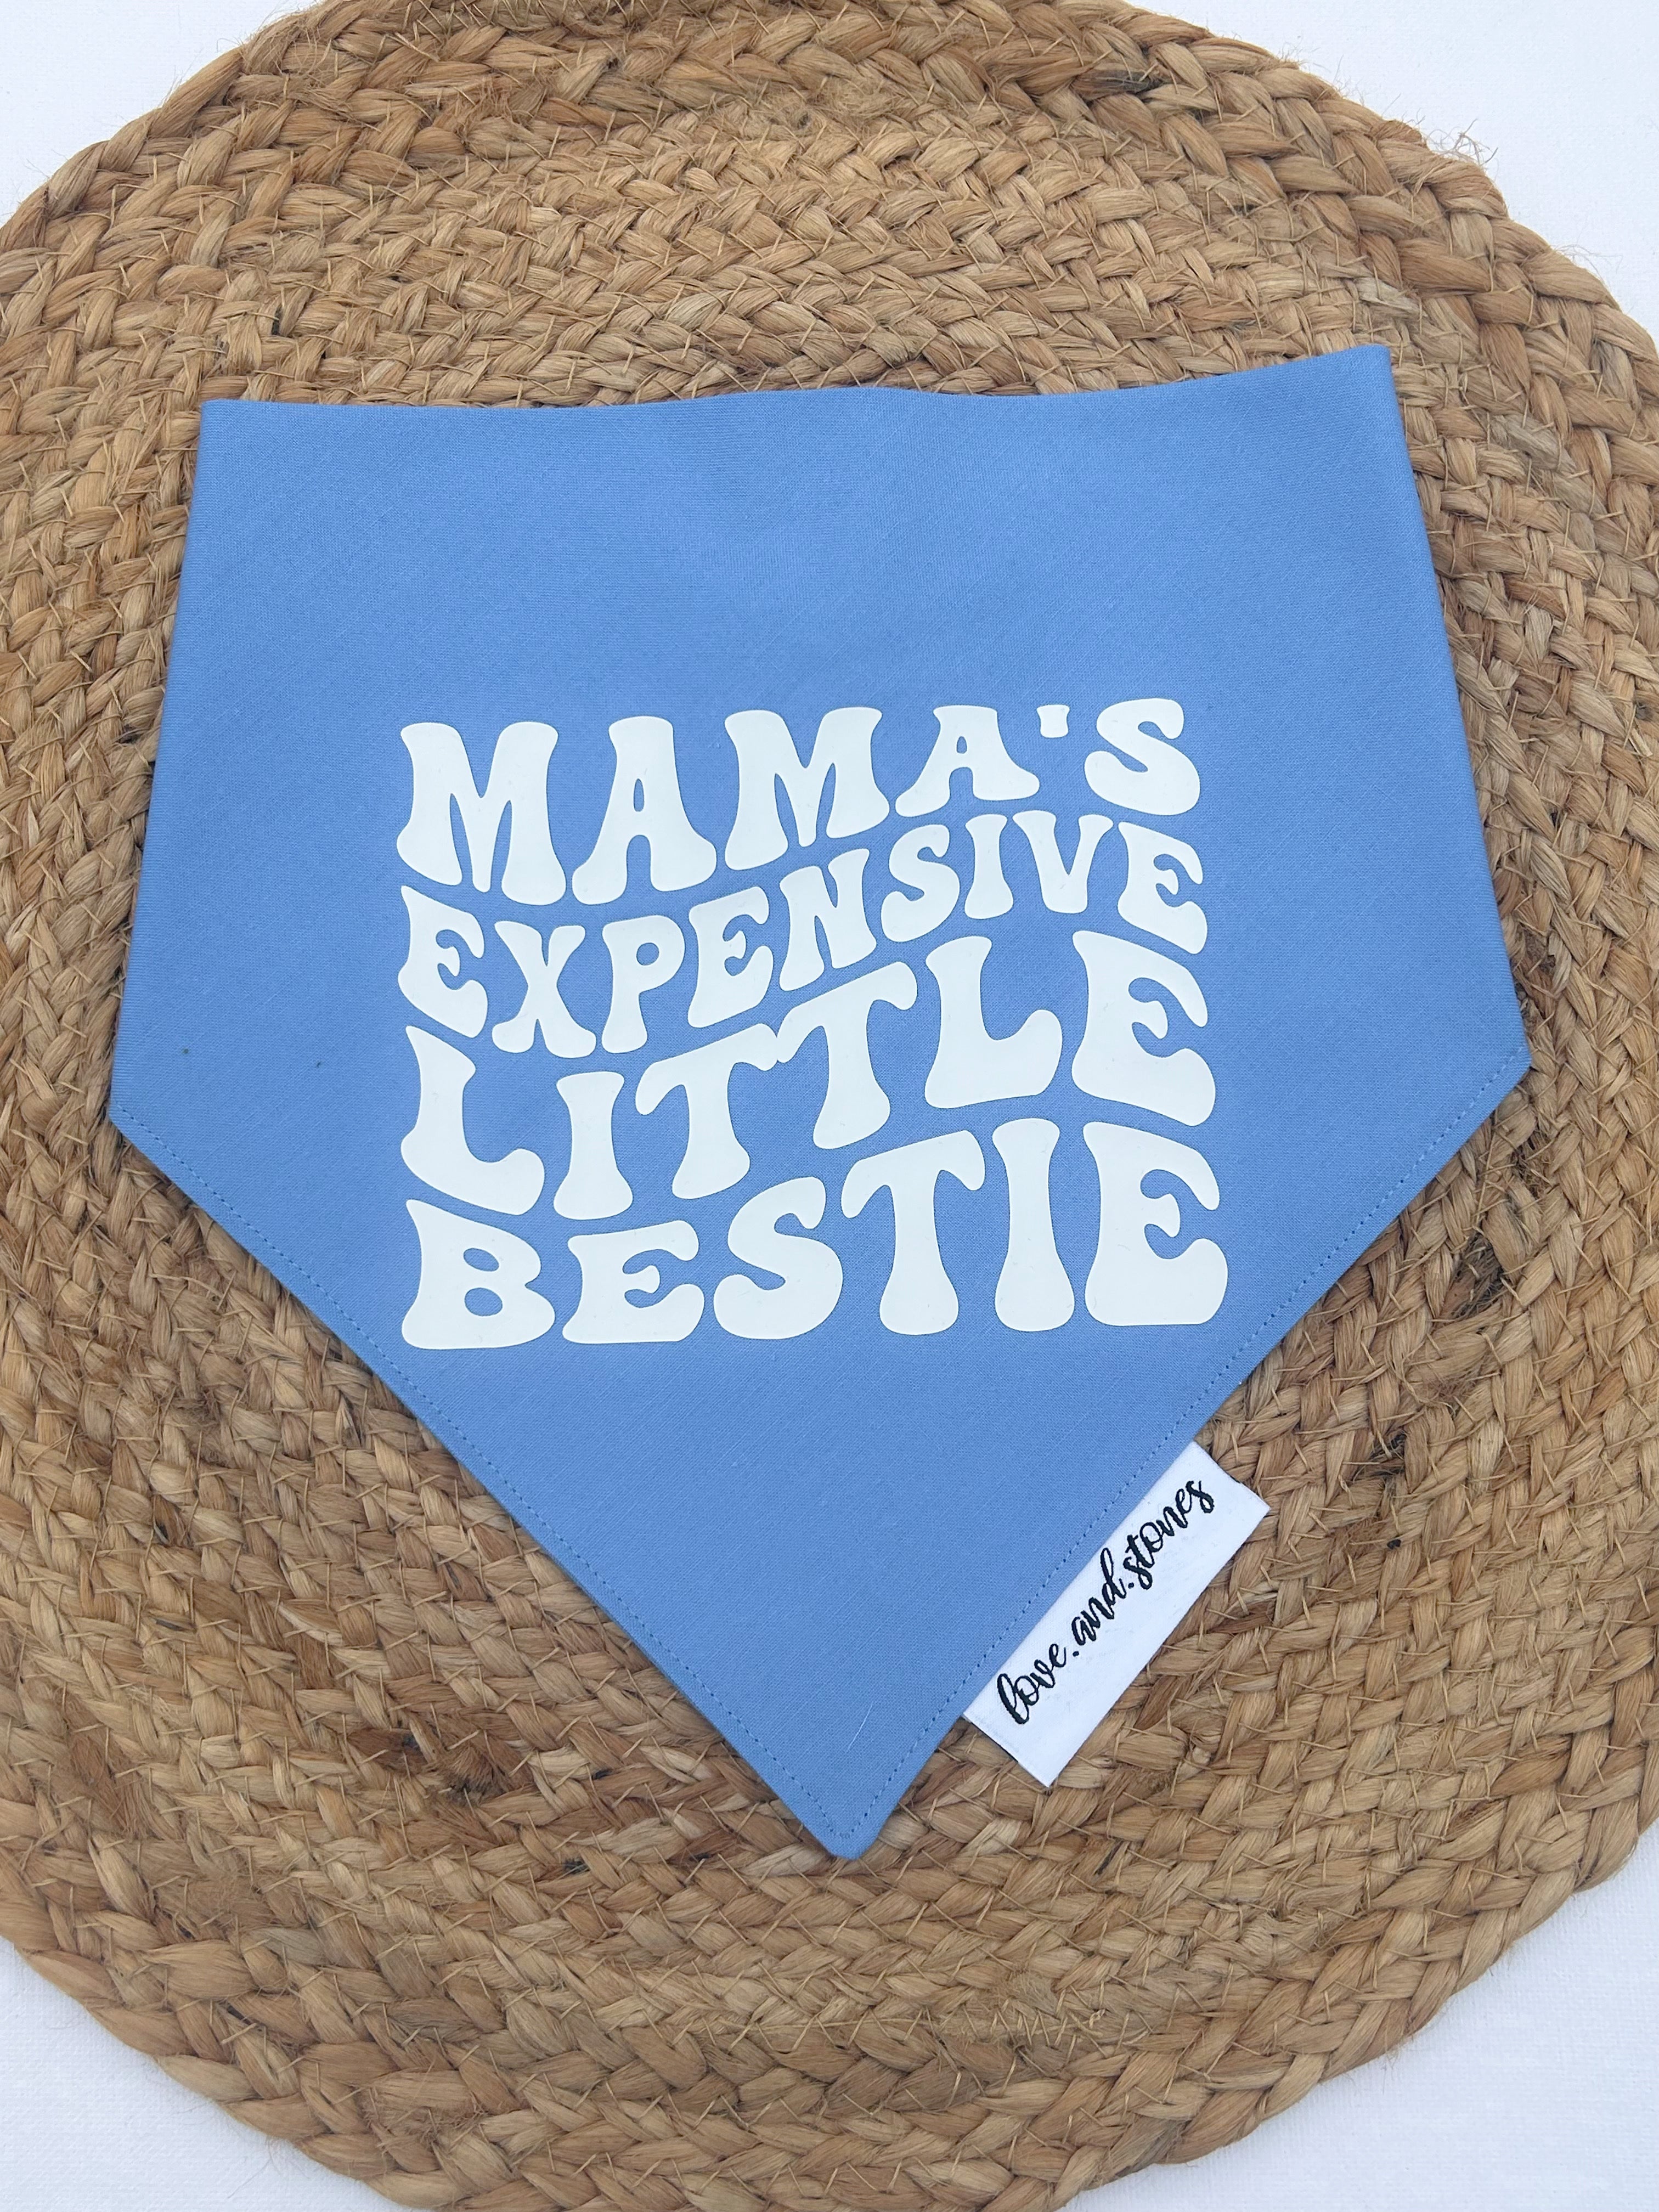 Mama’s expensive little bestie